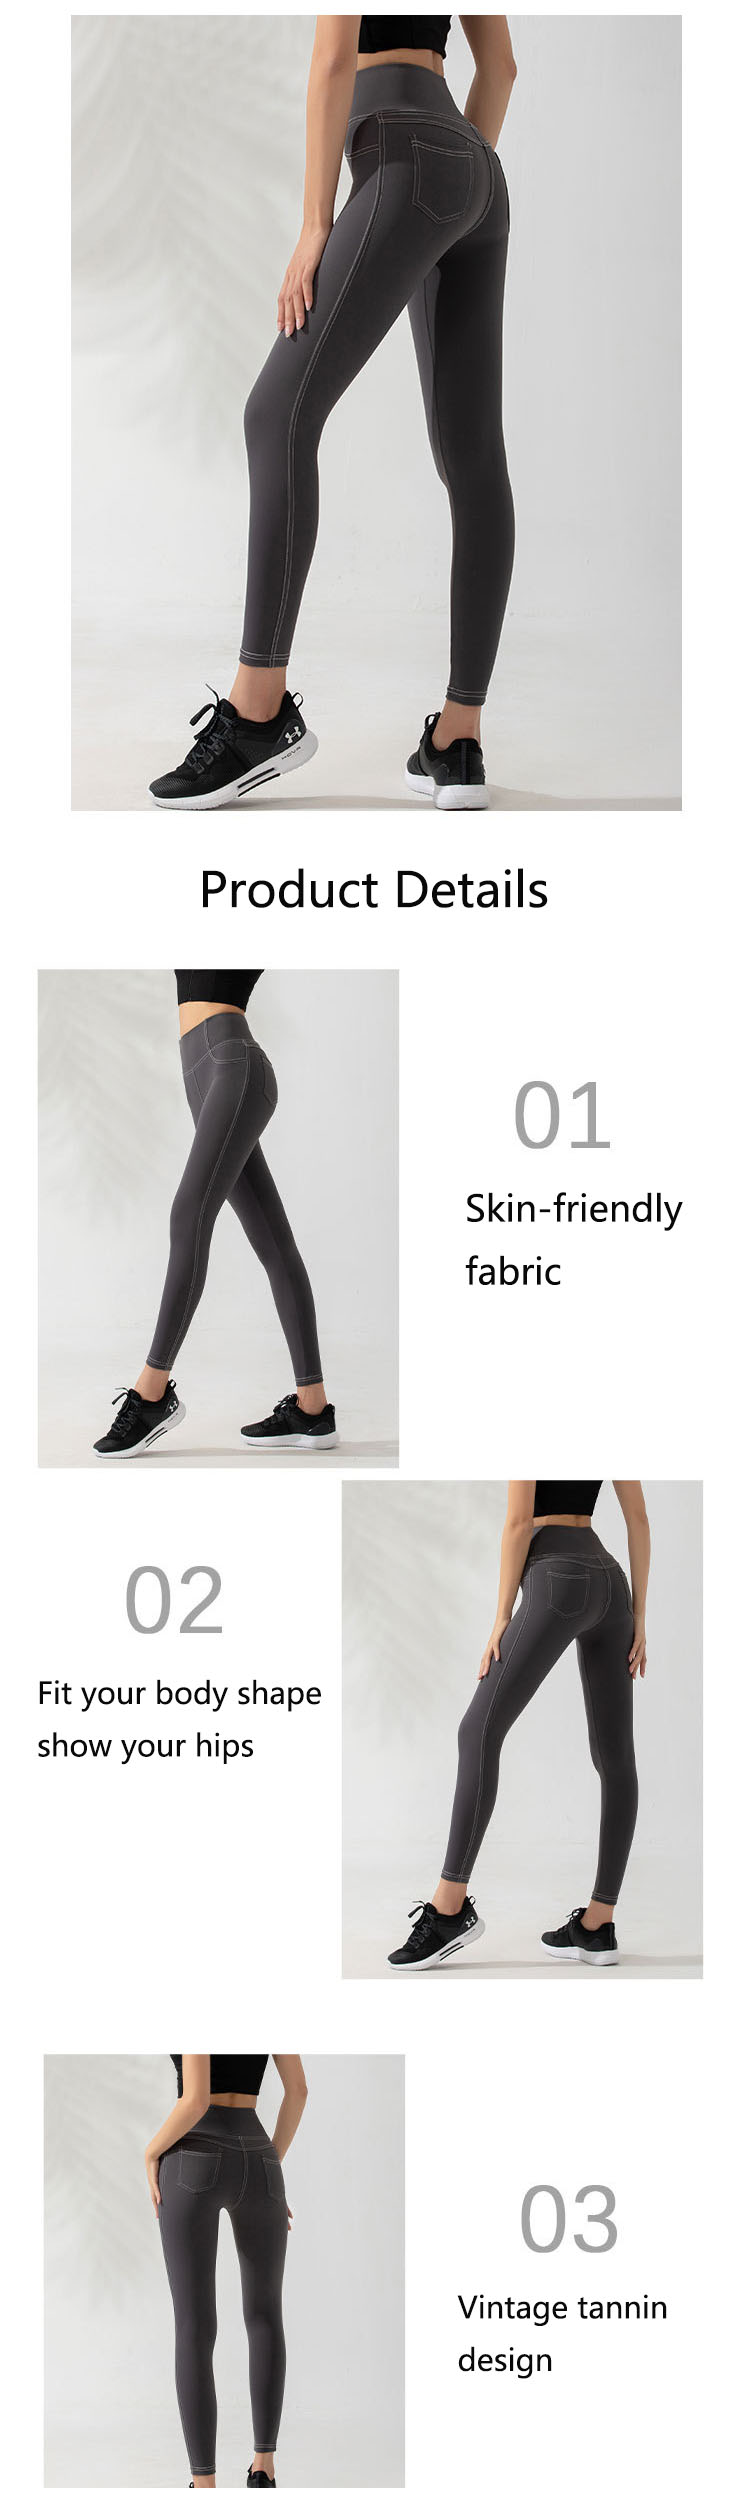 Fit yoga pants focus on natural traceable fibers